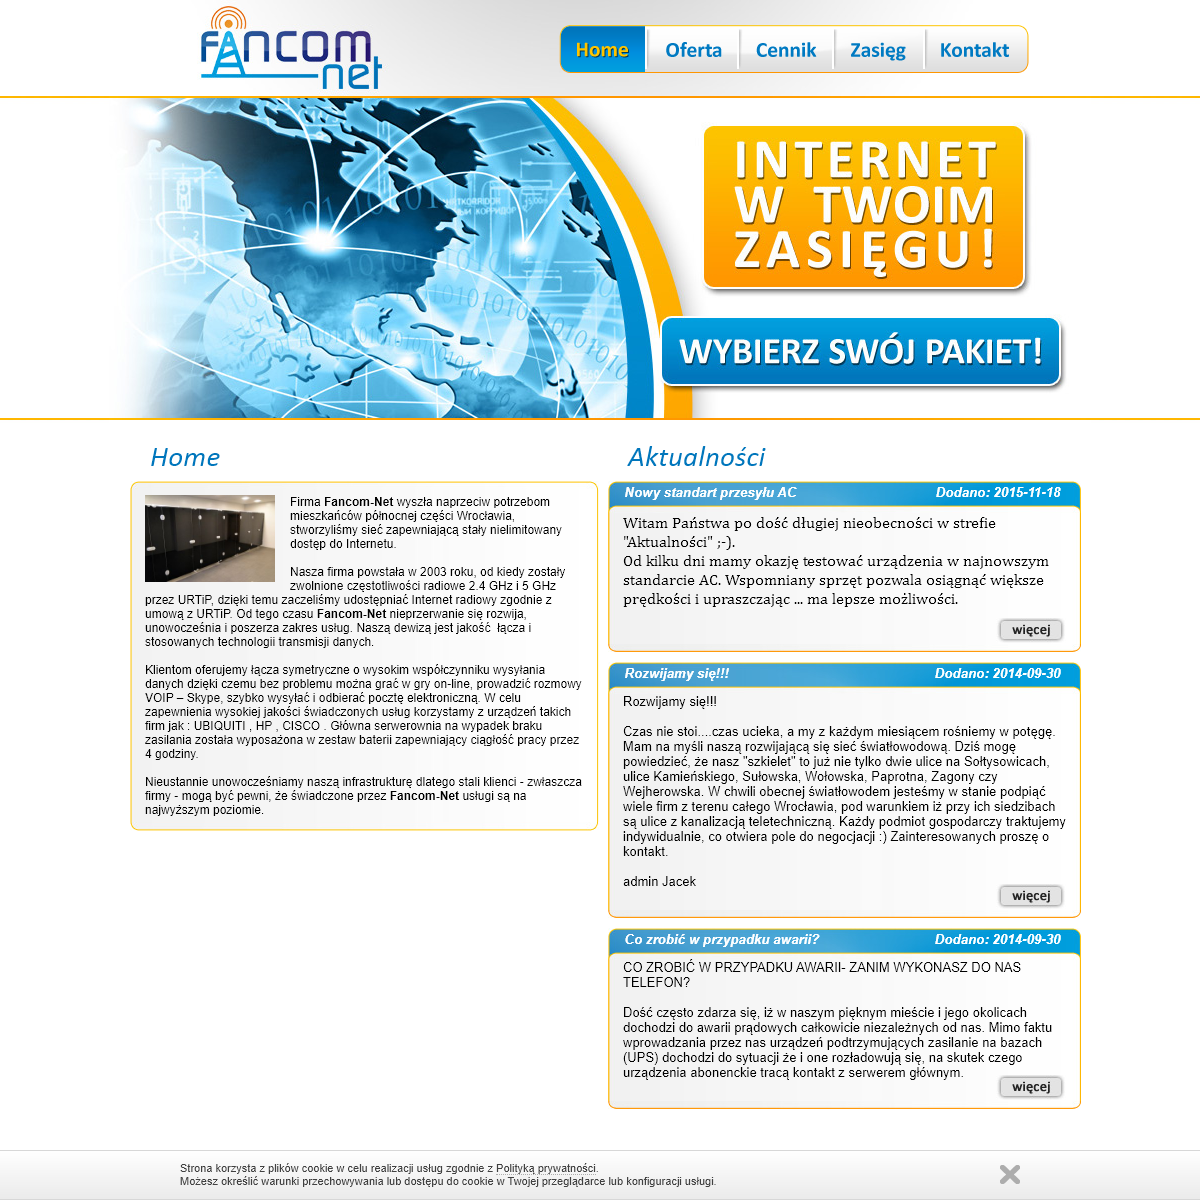 A complete backup of fancom-net.pl